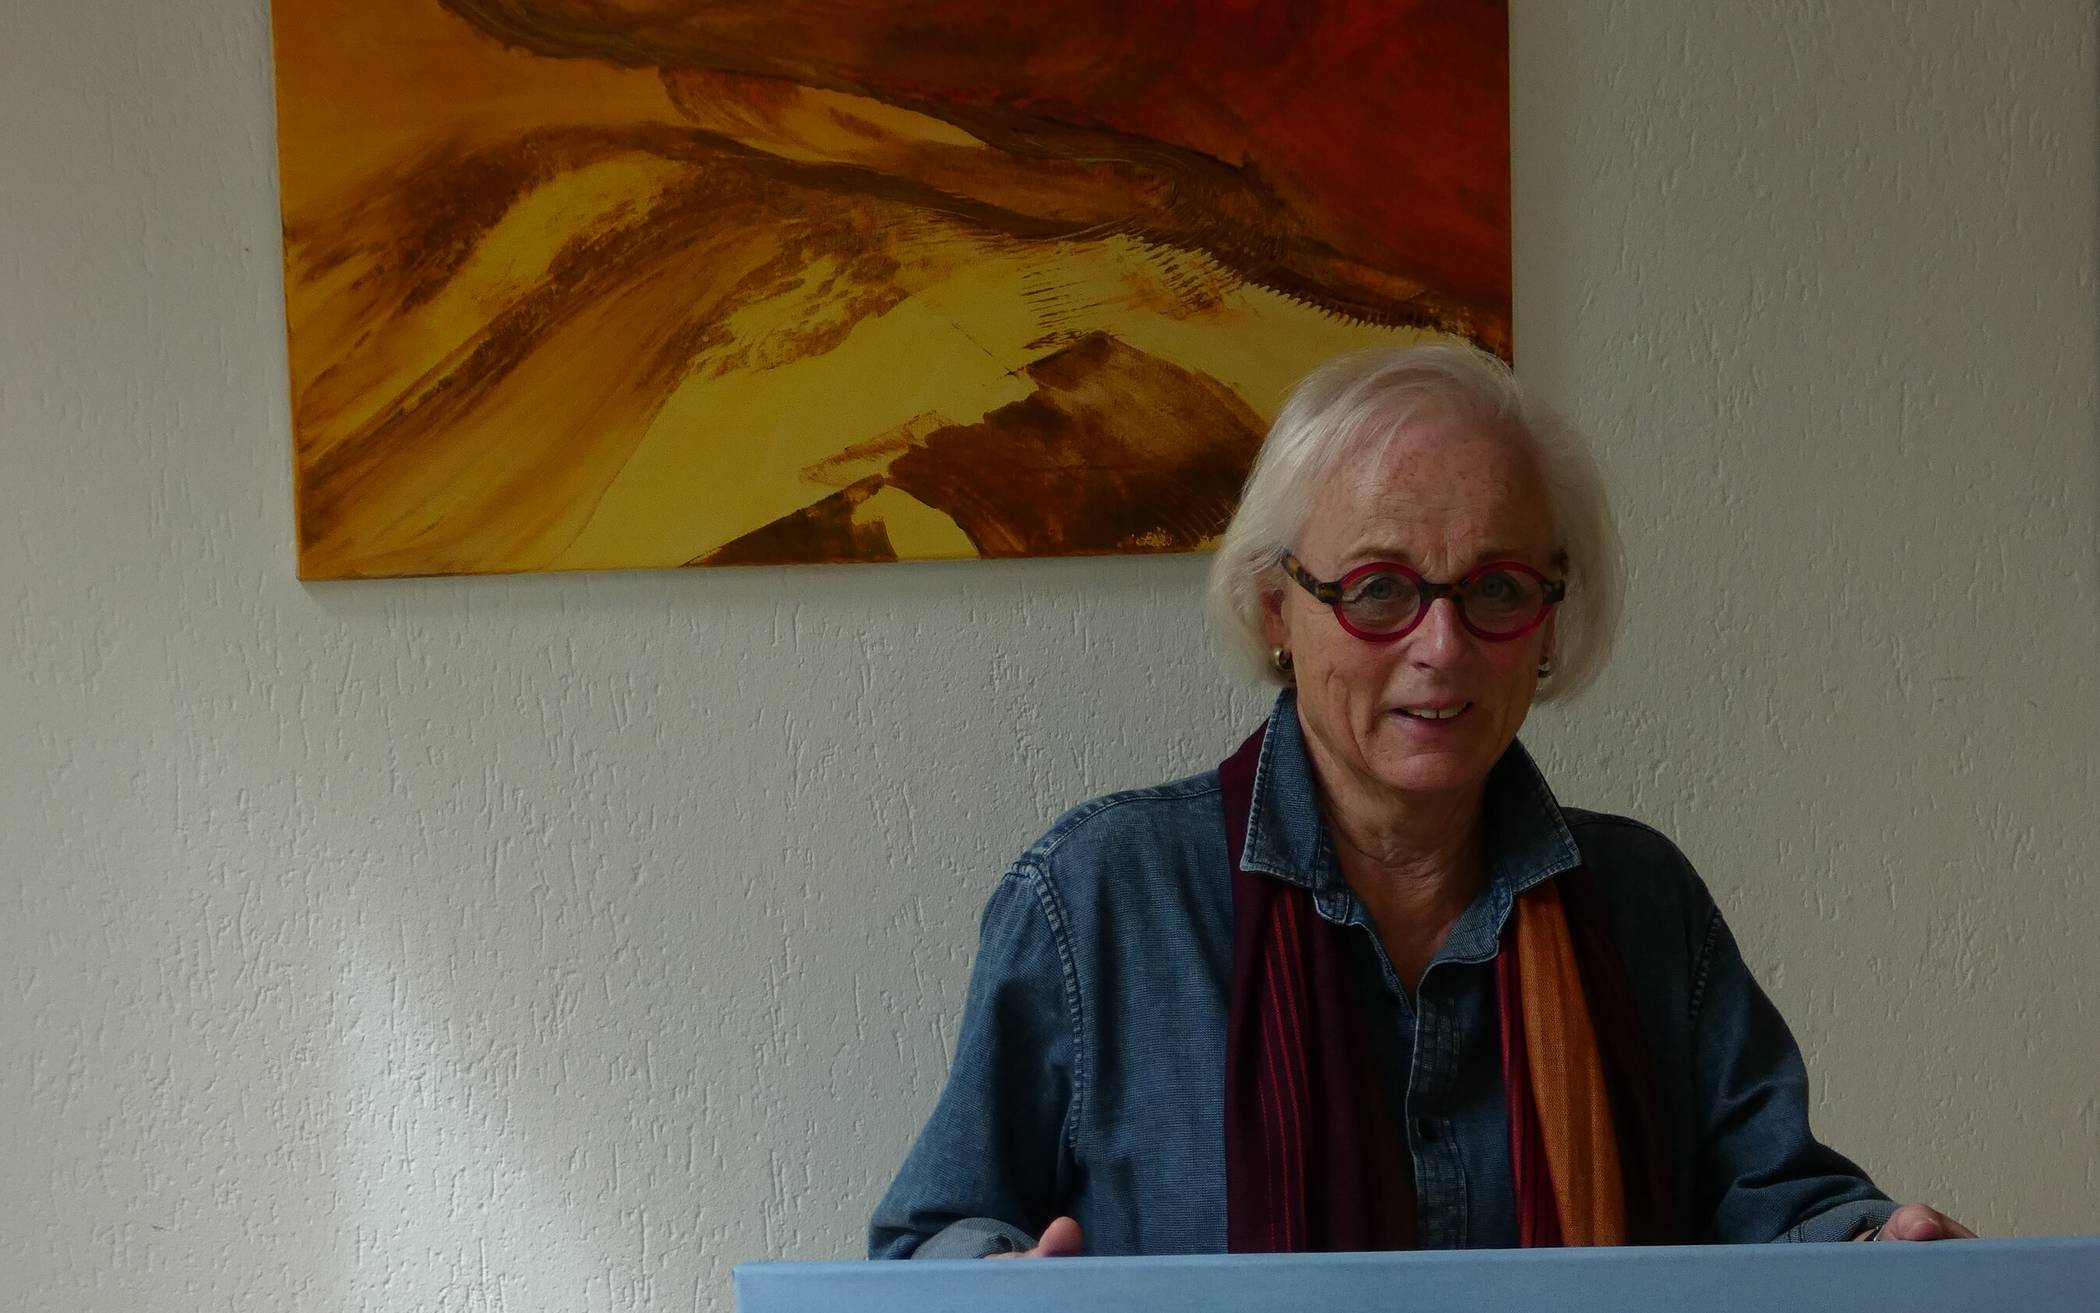  Rita Döhmer stellt bis zum 30. Juli in der Begegnungsstätte Gerberstraße aus.   